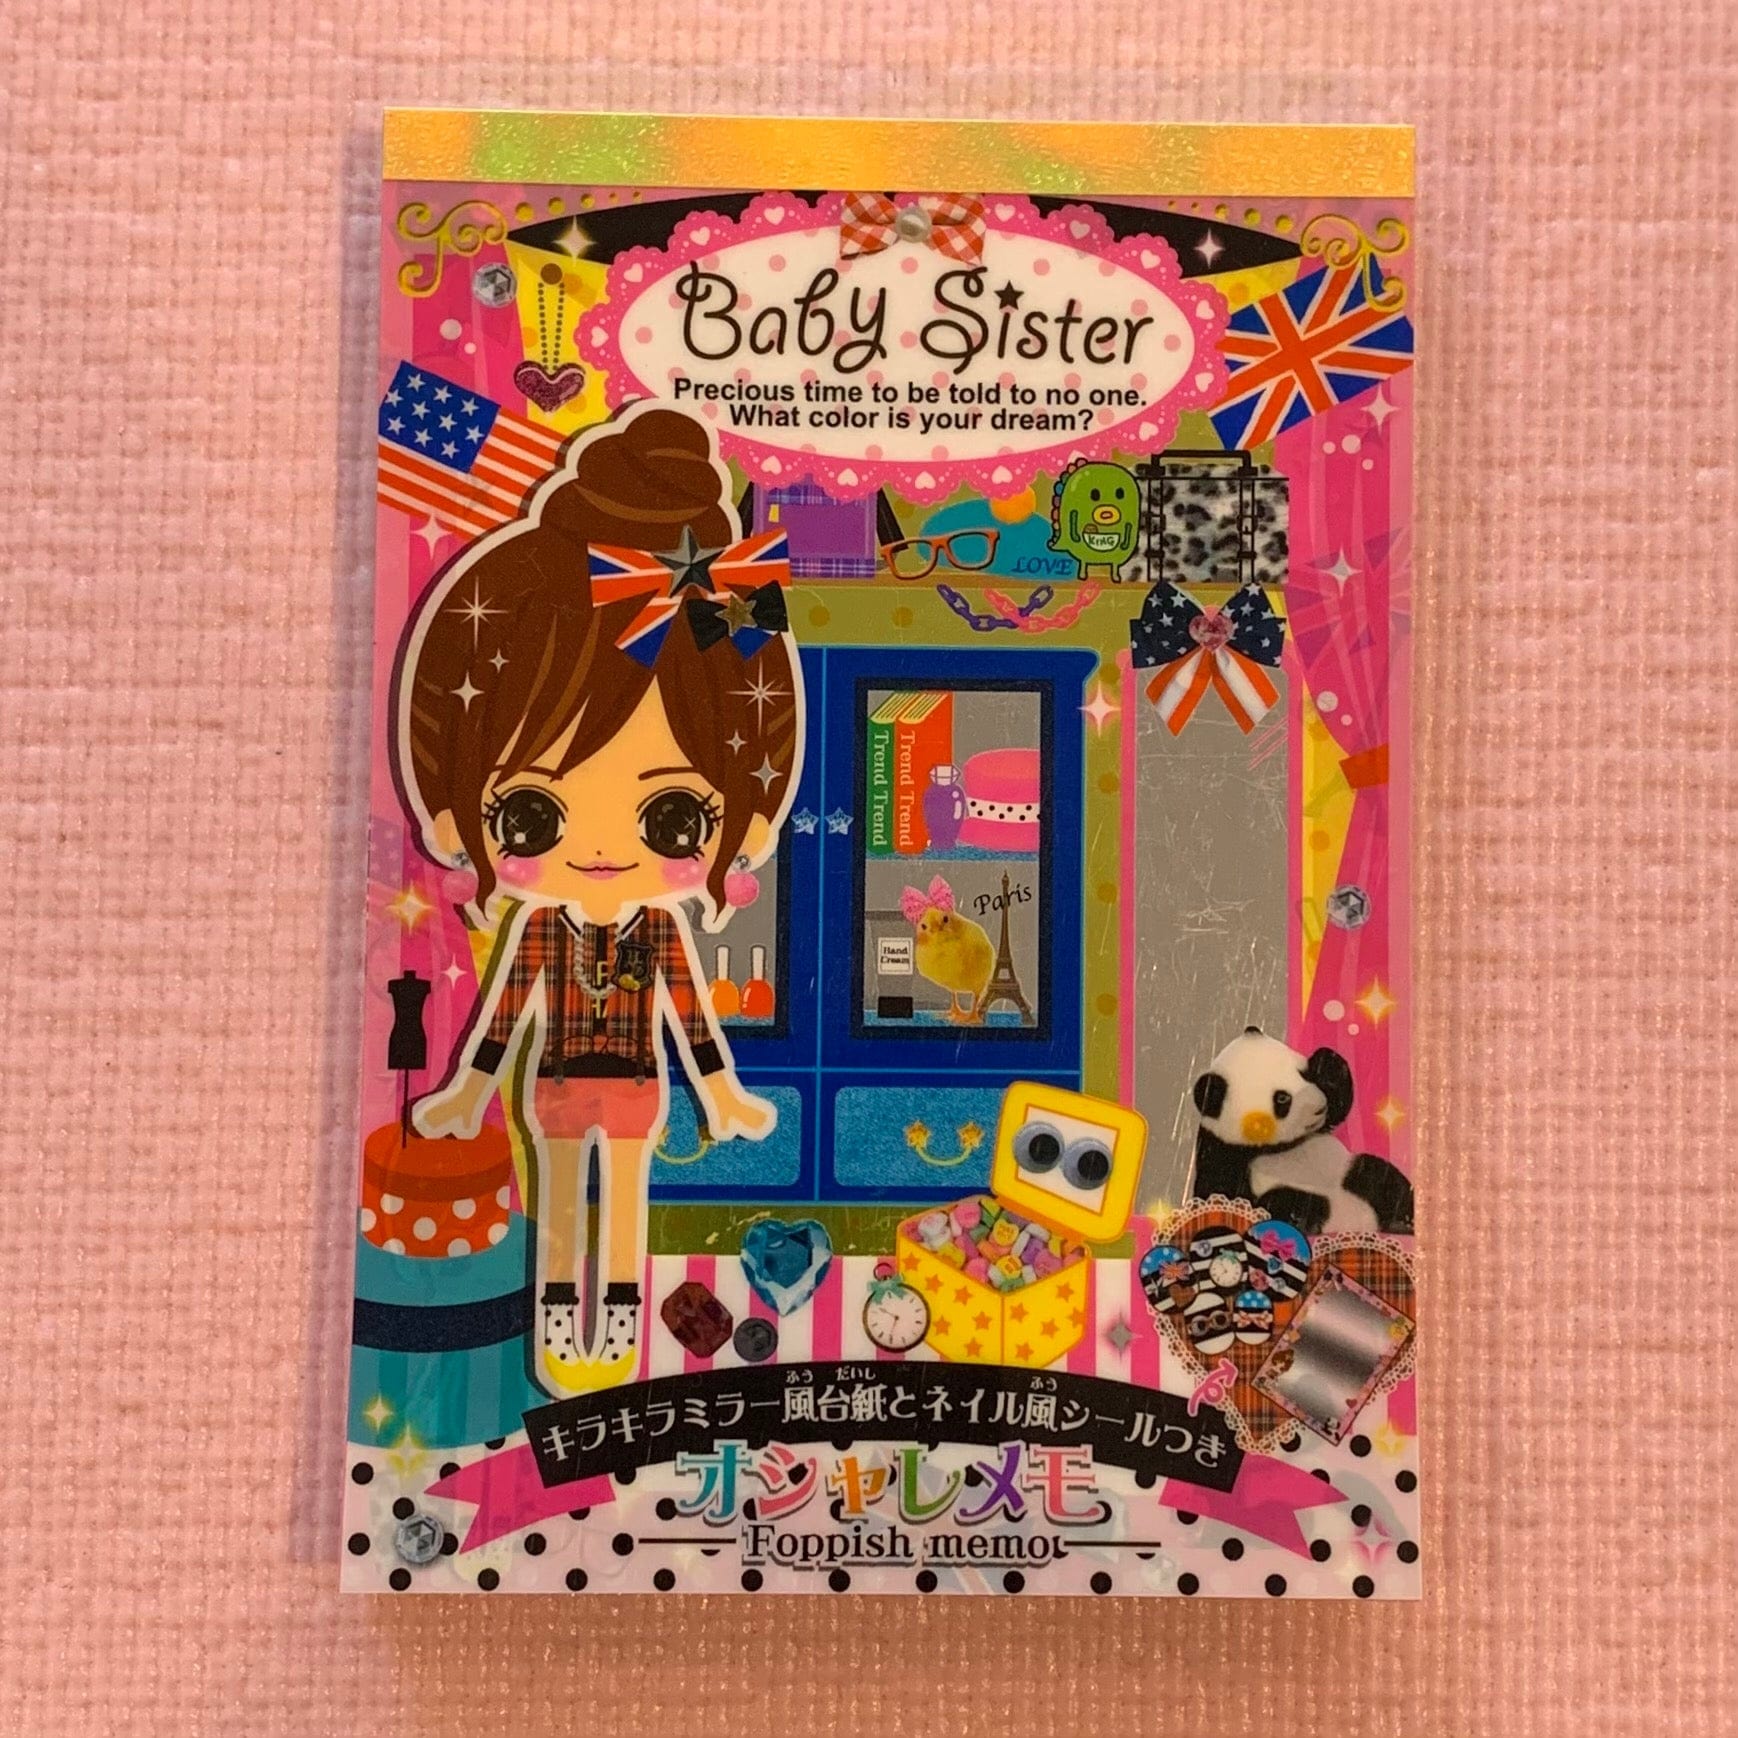 Kawaii Import Foppish Memo with Stickers: Baby Sister Toresodo Kawaii Gifts 4530344605327